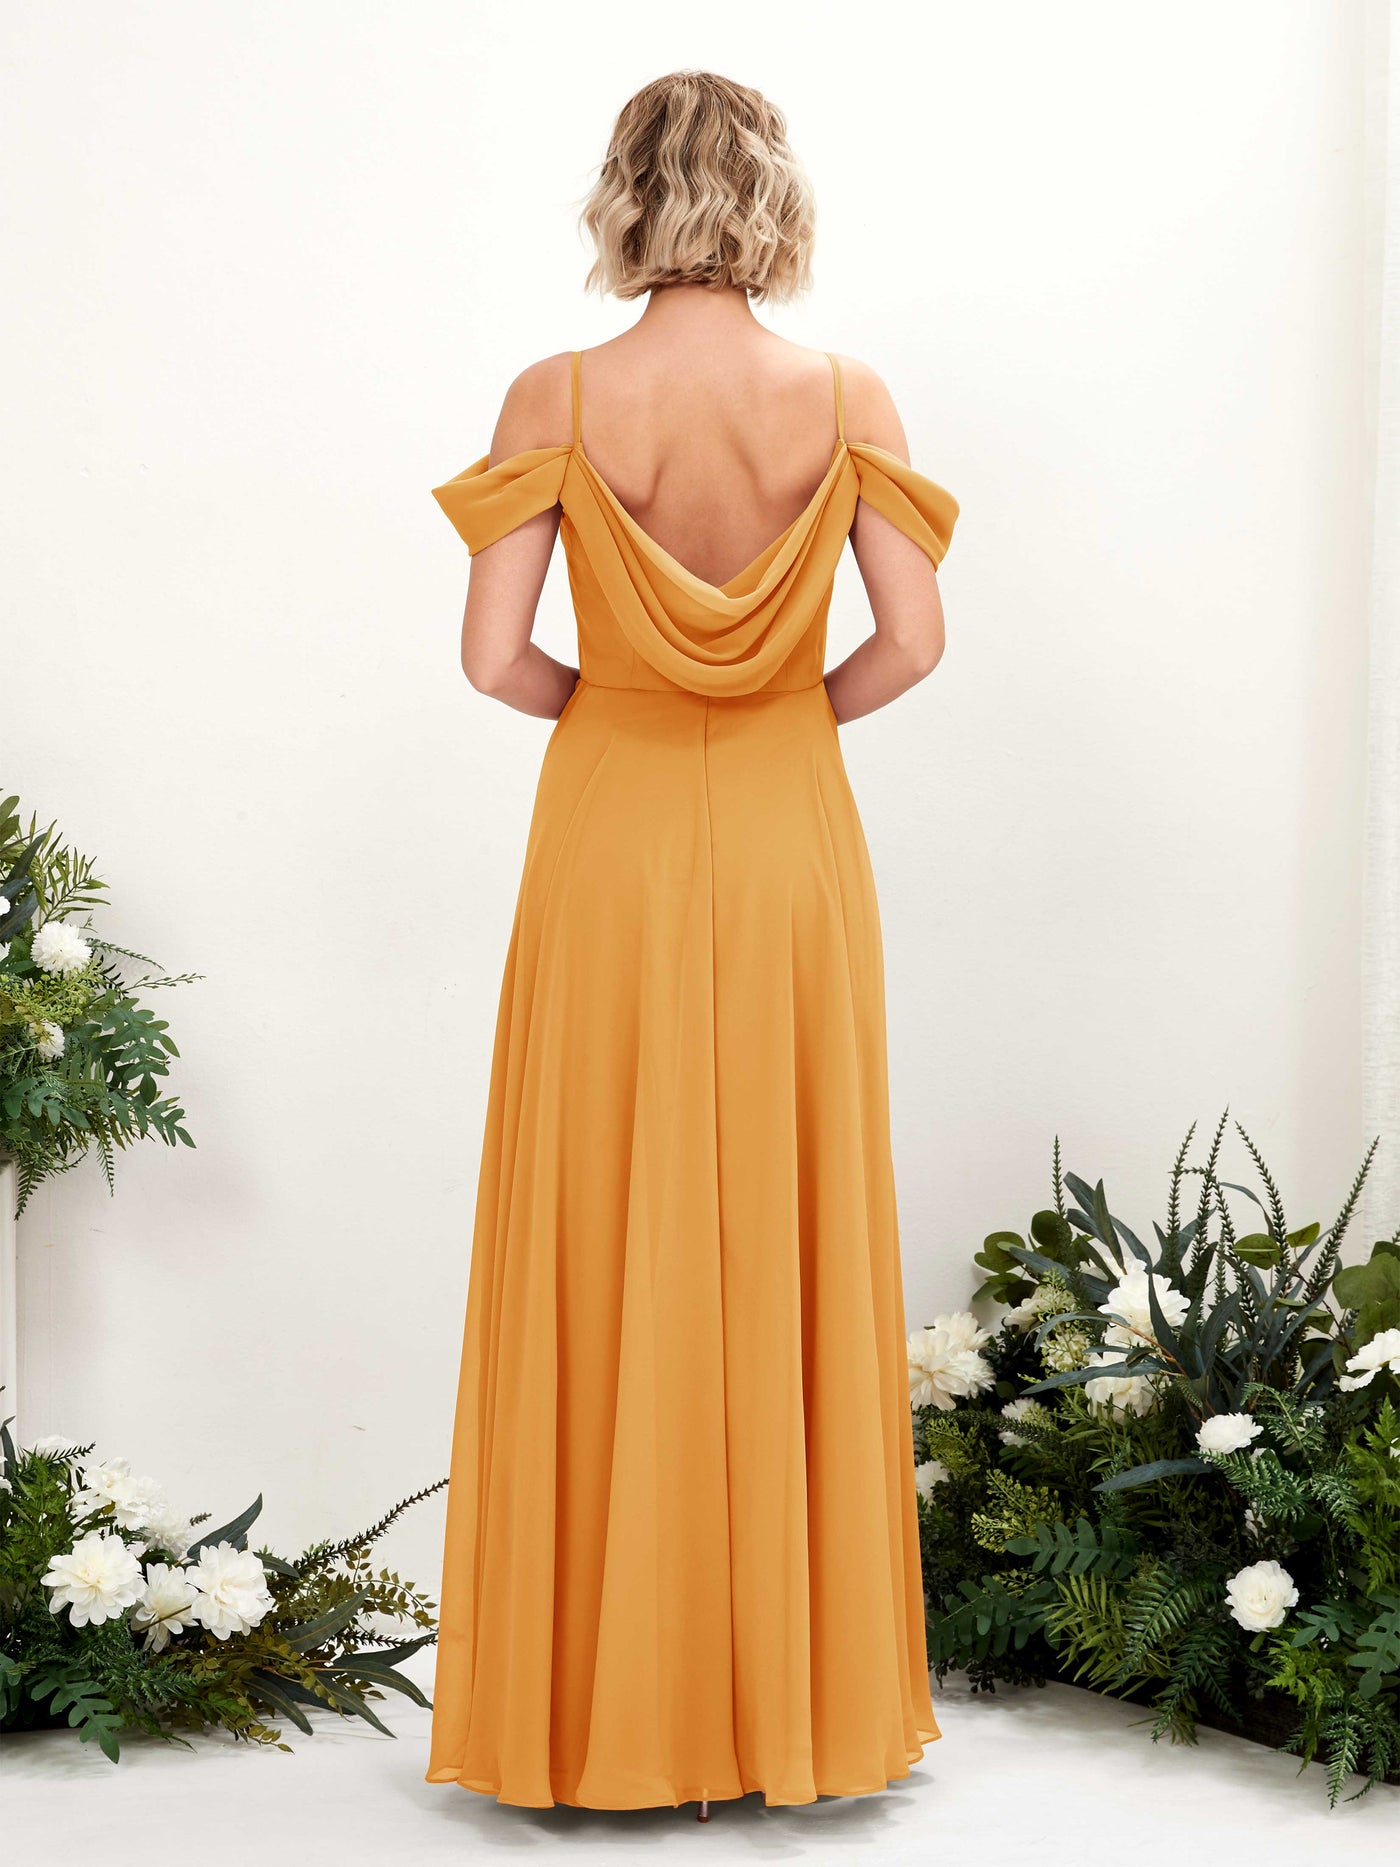 Mango Bridesmaid Dresses Bridesmaid Dress A-line Chiffon Off Shoulder Full Length Sleeveless Wedding Party Dress (81224902)#color_mango